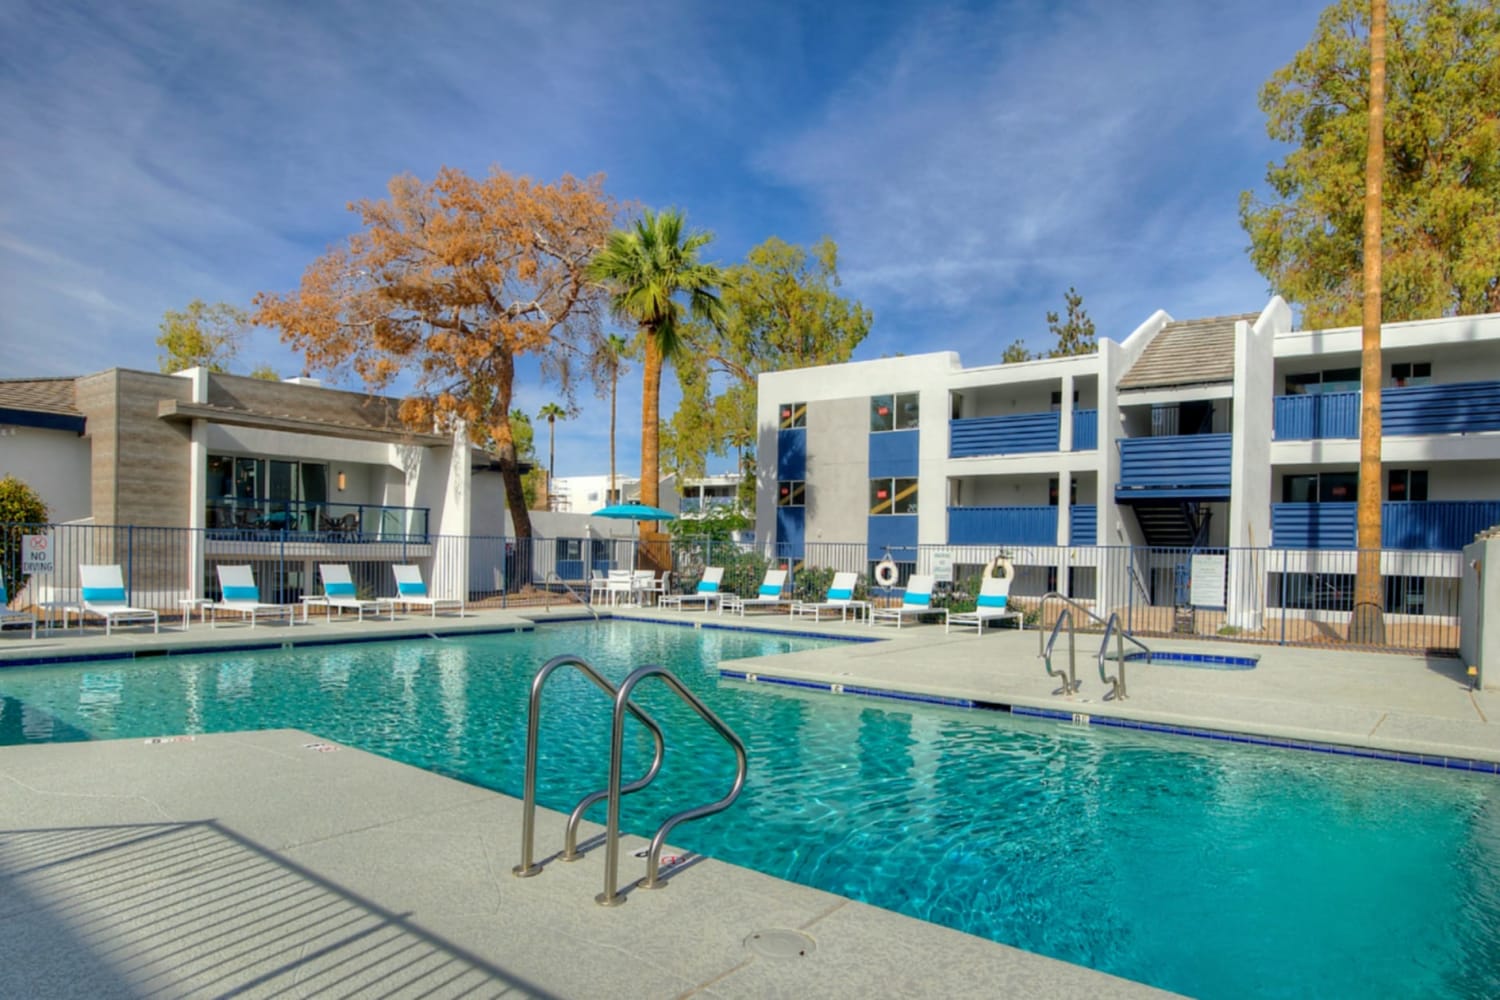 Swimming pool at The Halifax in Phoenix, Arizona